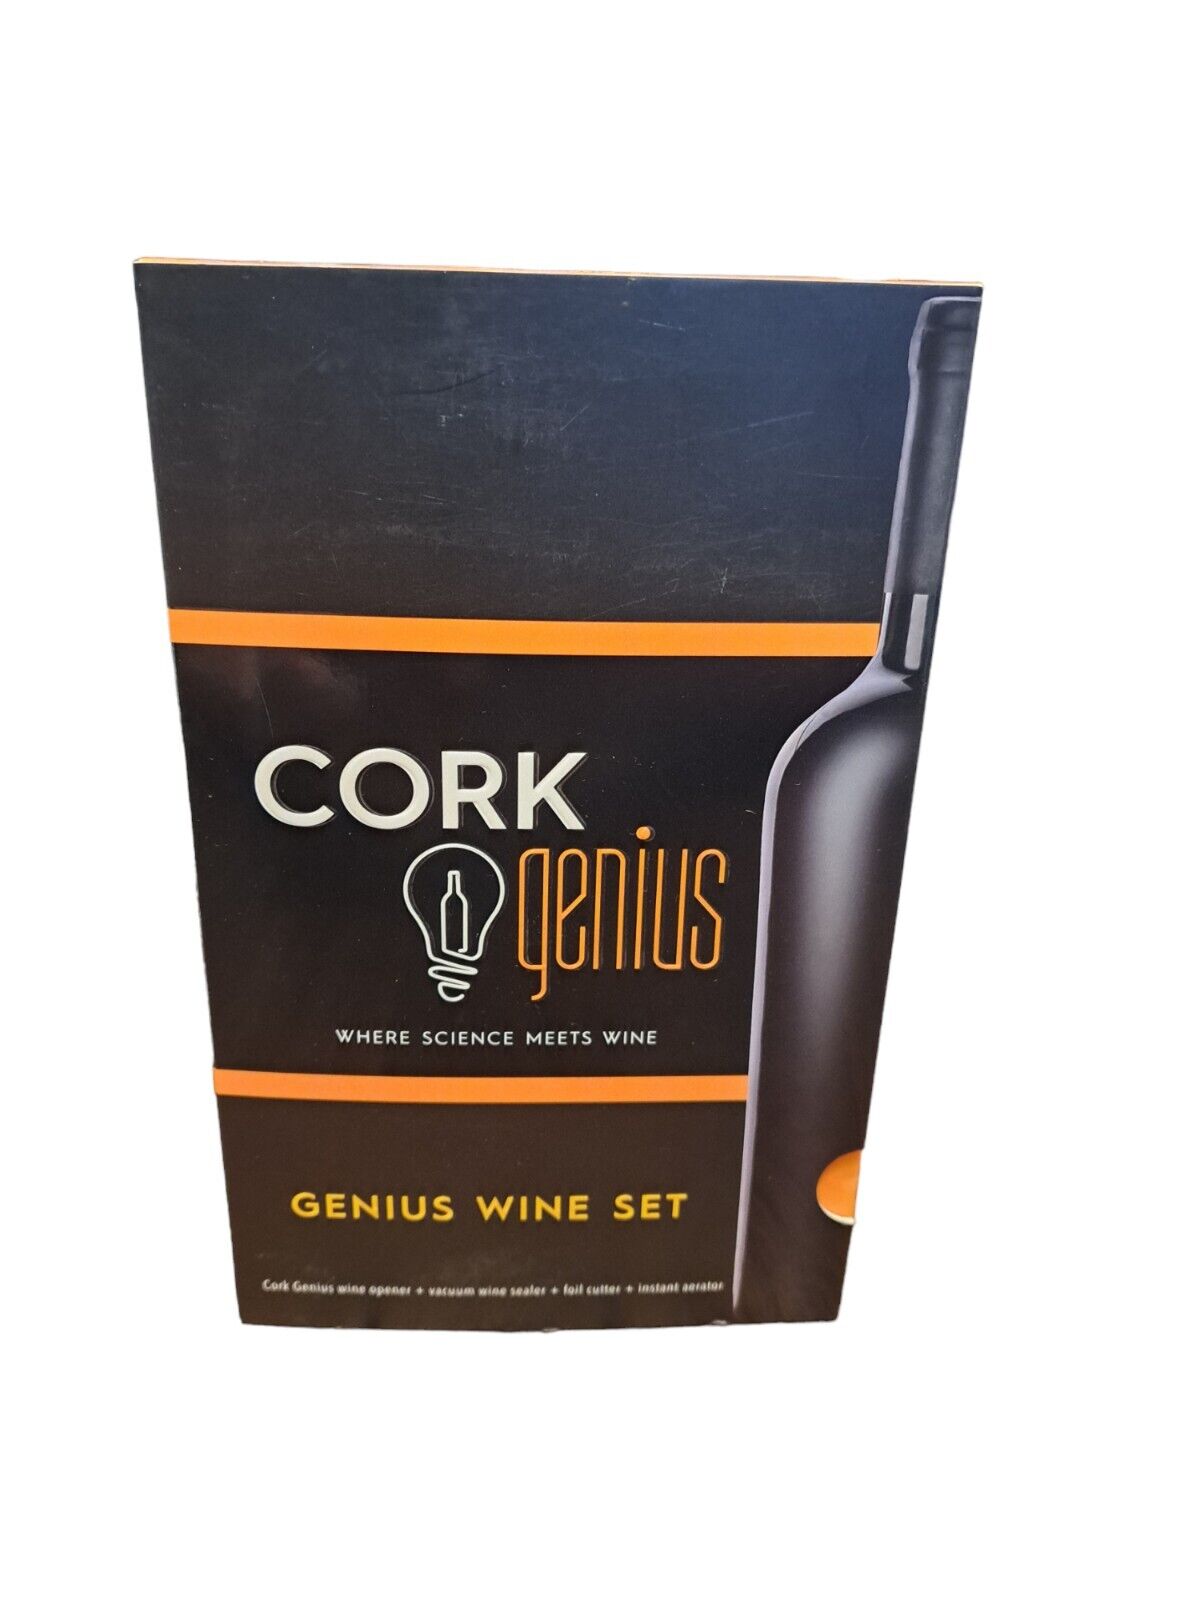 Cork Genius Wine Opener Set (4-Piece) With Wine Accessories - Includes Air Pump